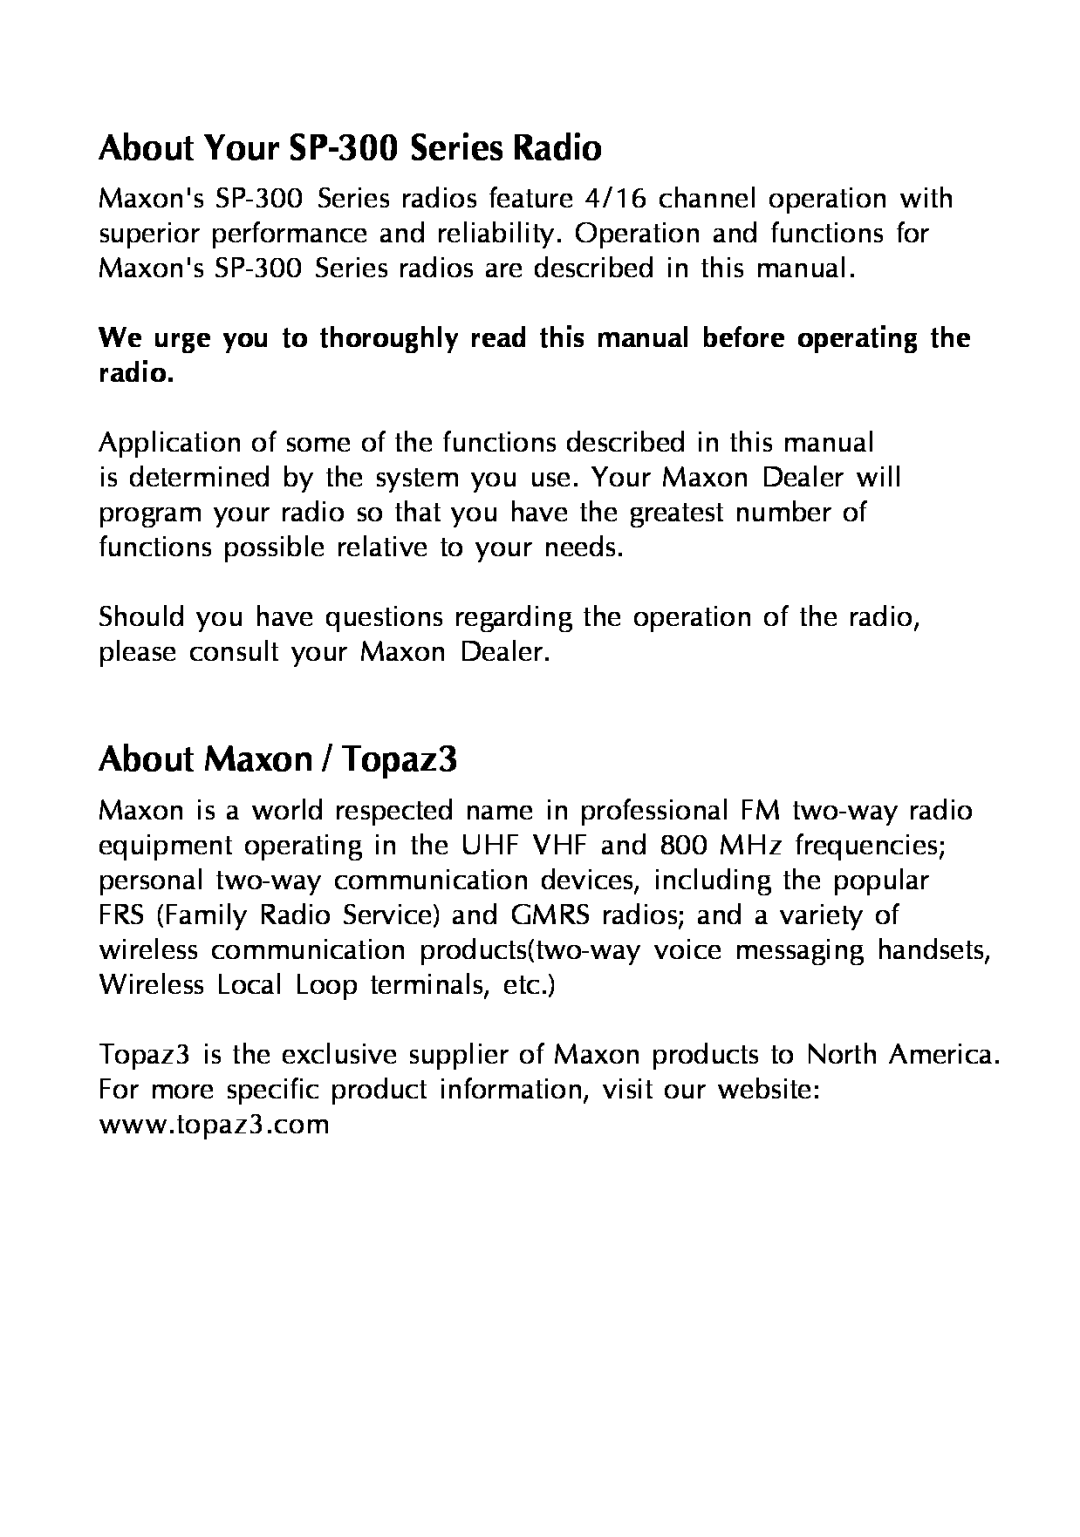 Maxon Telecom SP-310, SP-330 & SP-340, SP-320 manual About Your SP-300Series Radio, About Maxon / Topaz3 